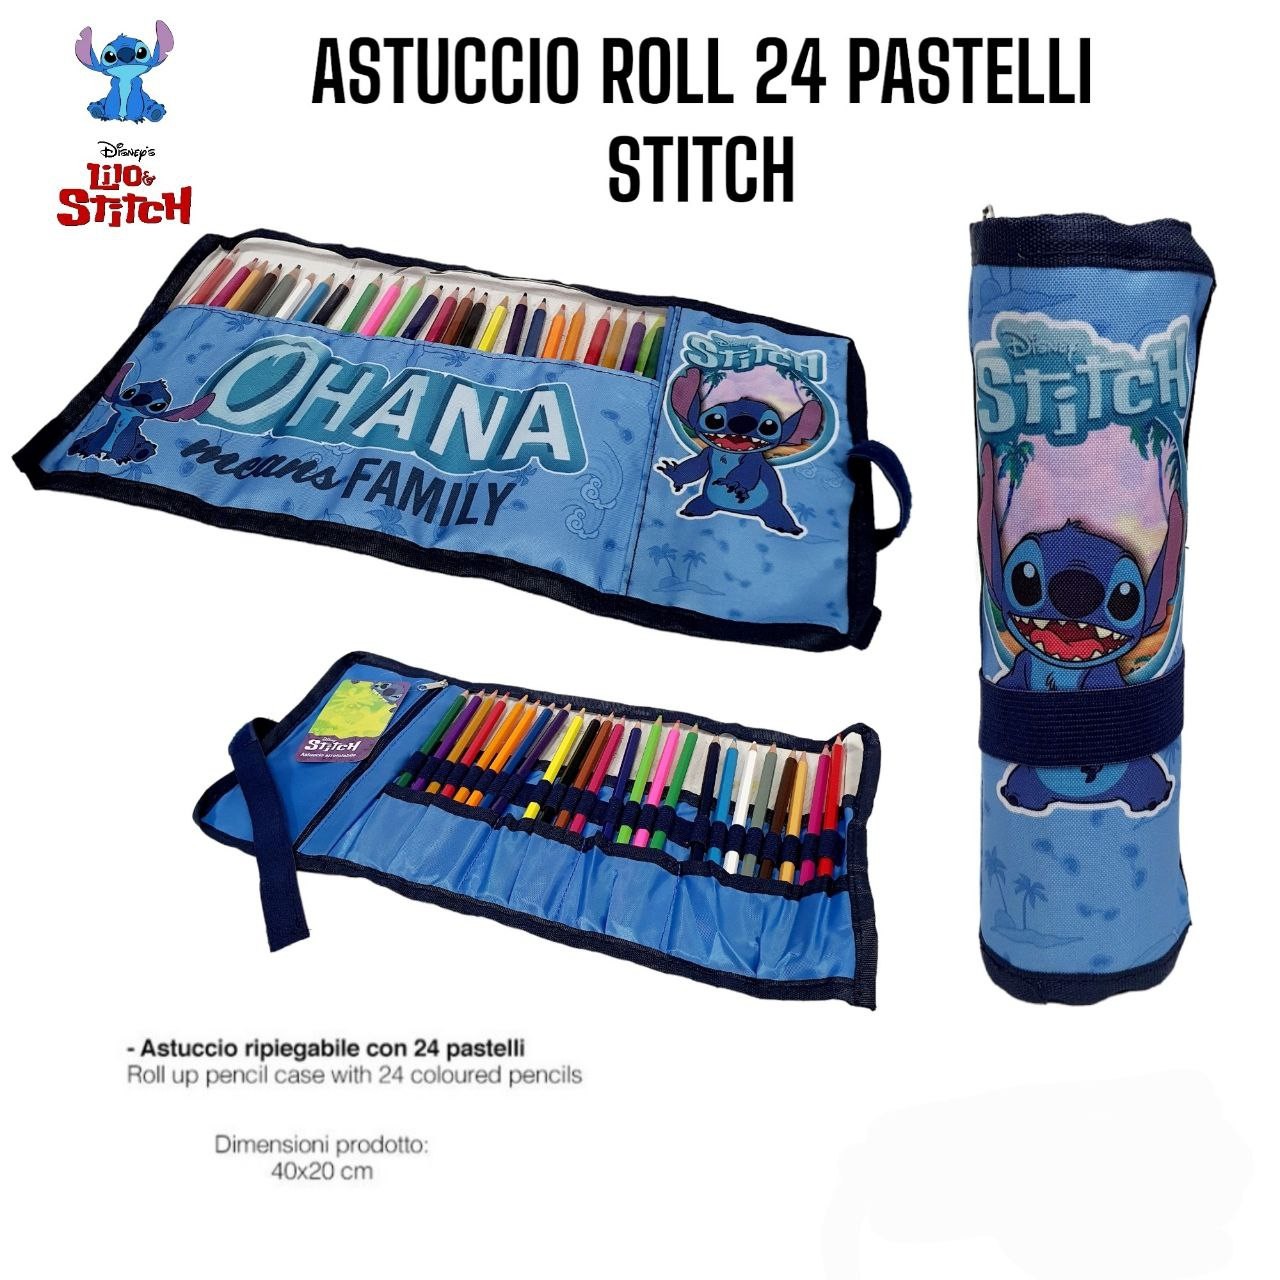 Astuccio - DISNEY STITCH